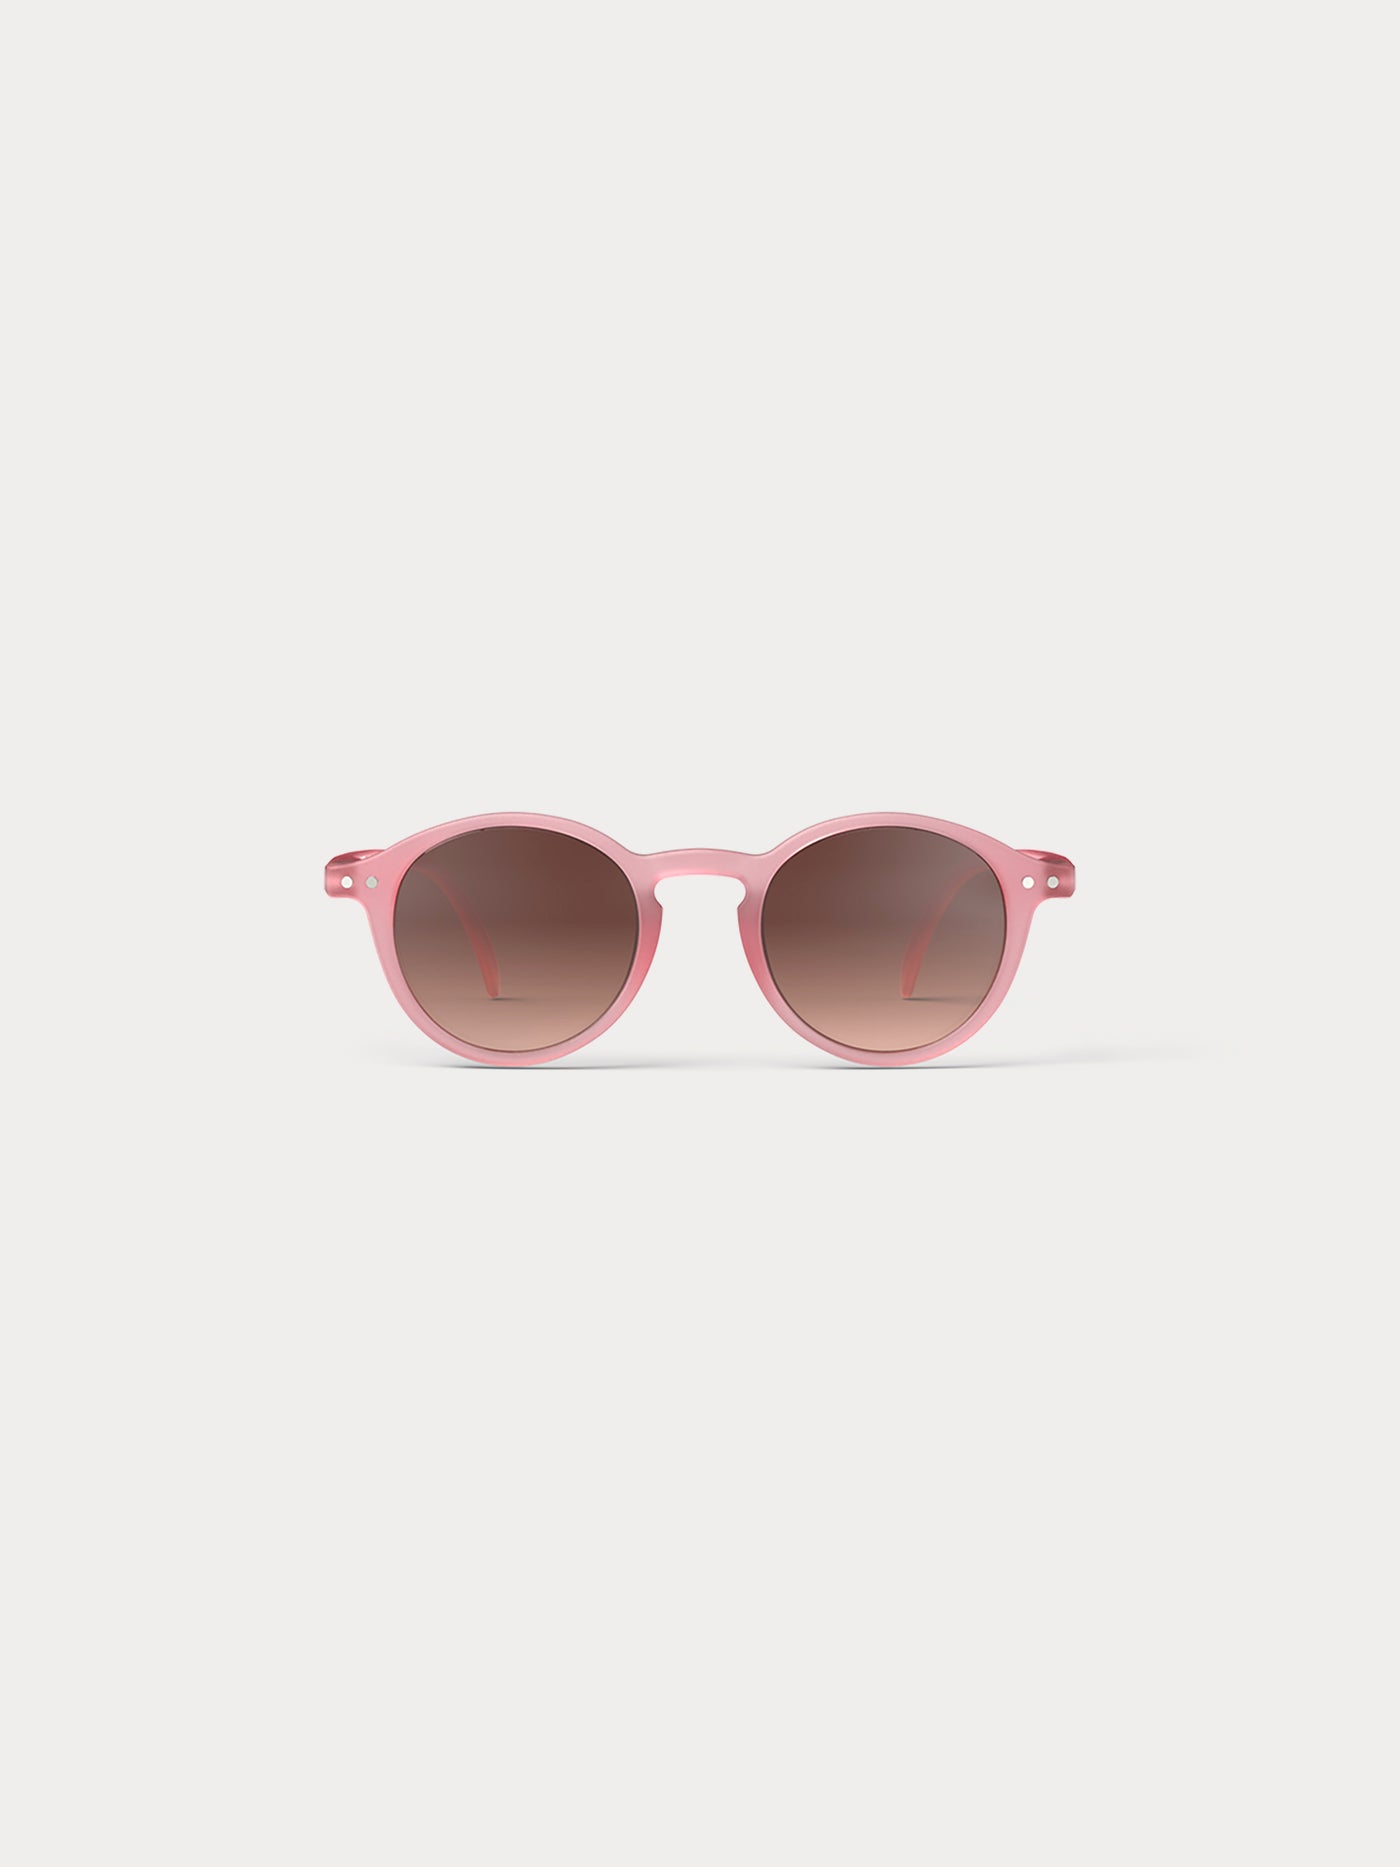 Junior Bonpoint x Izipizi Sunglasses faded pink